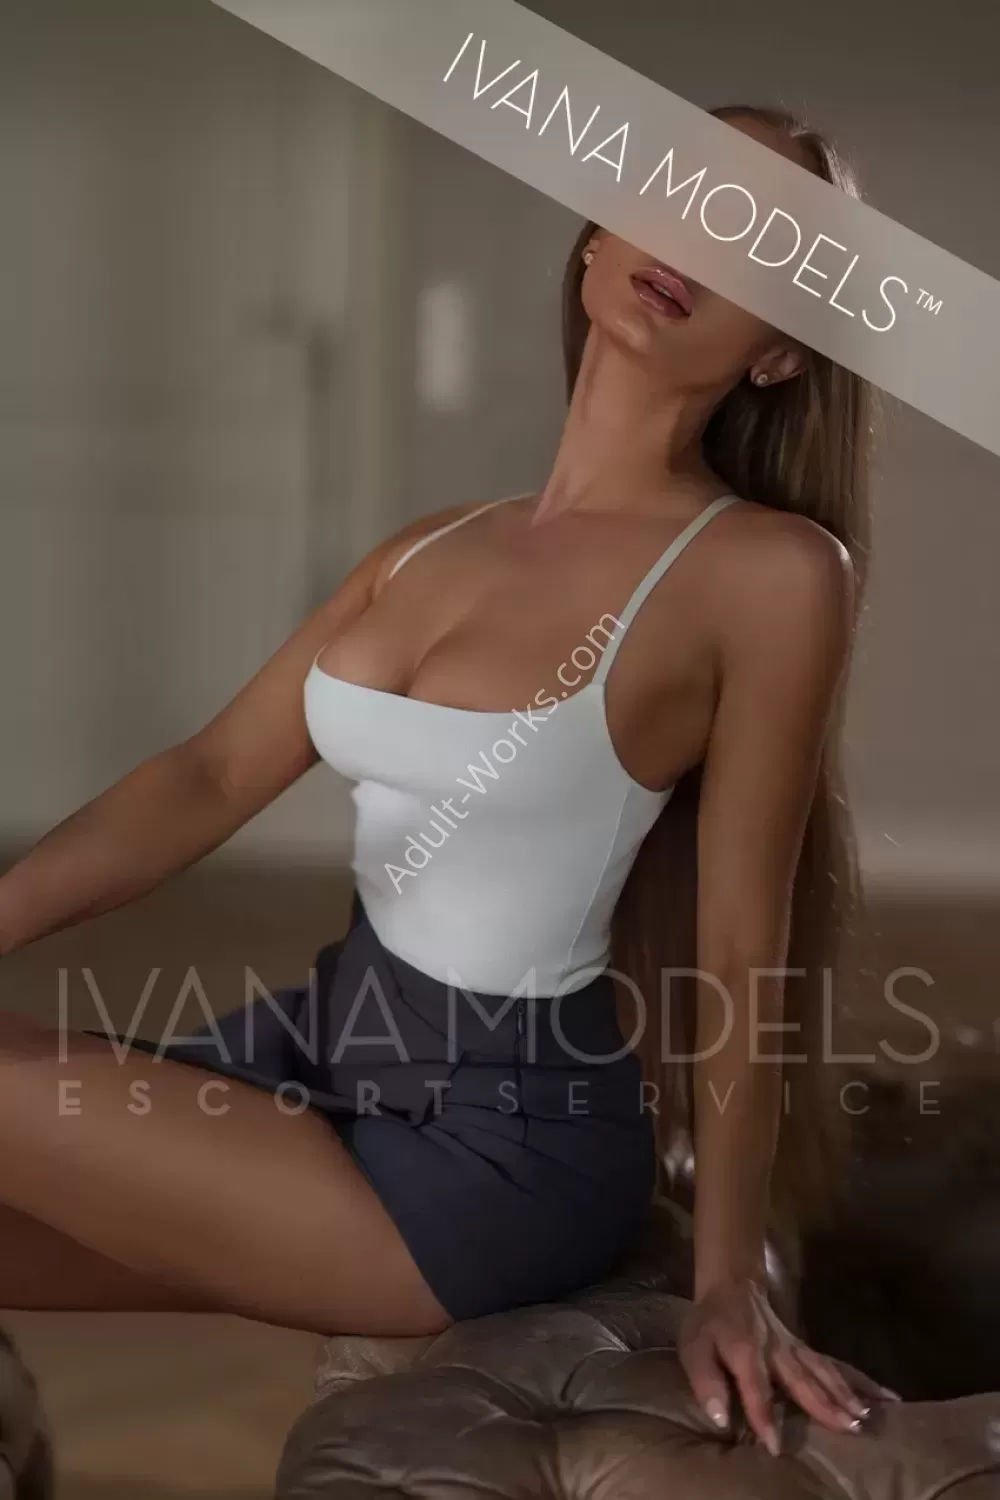 Ivana Models Escort Service, Berlin